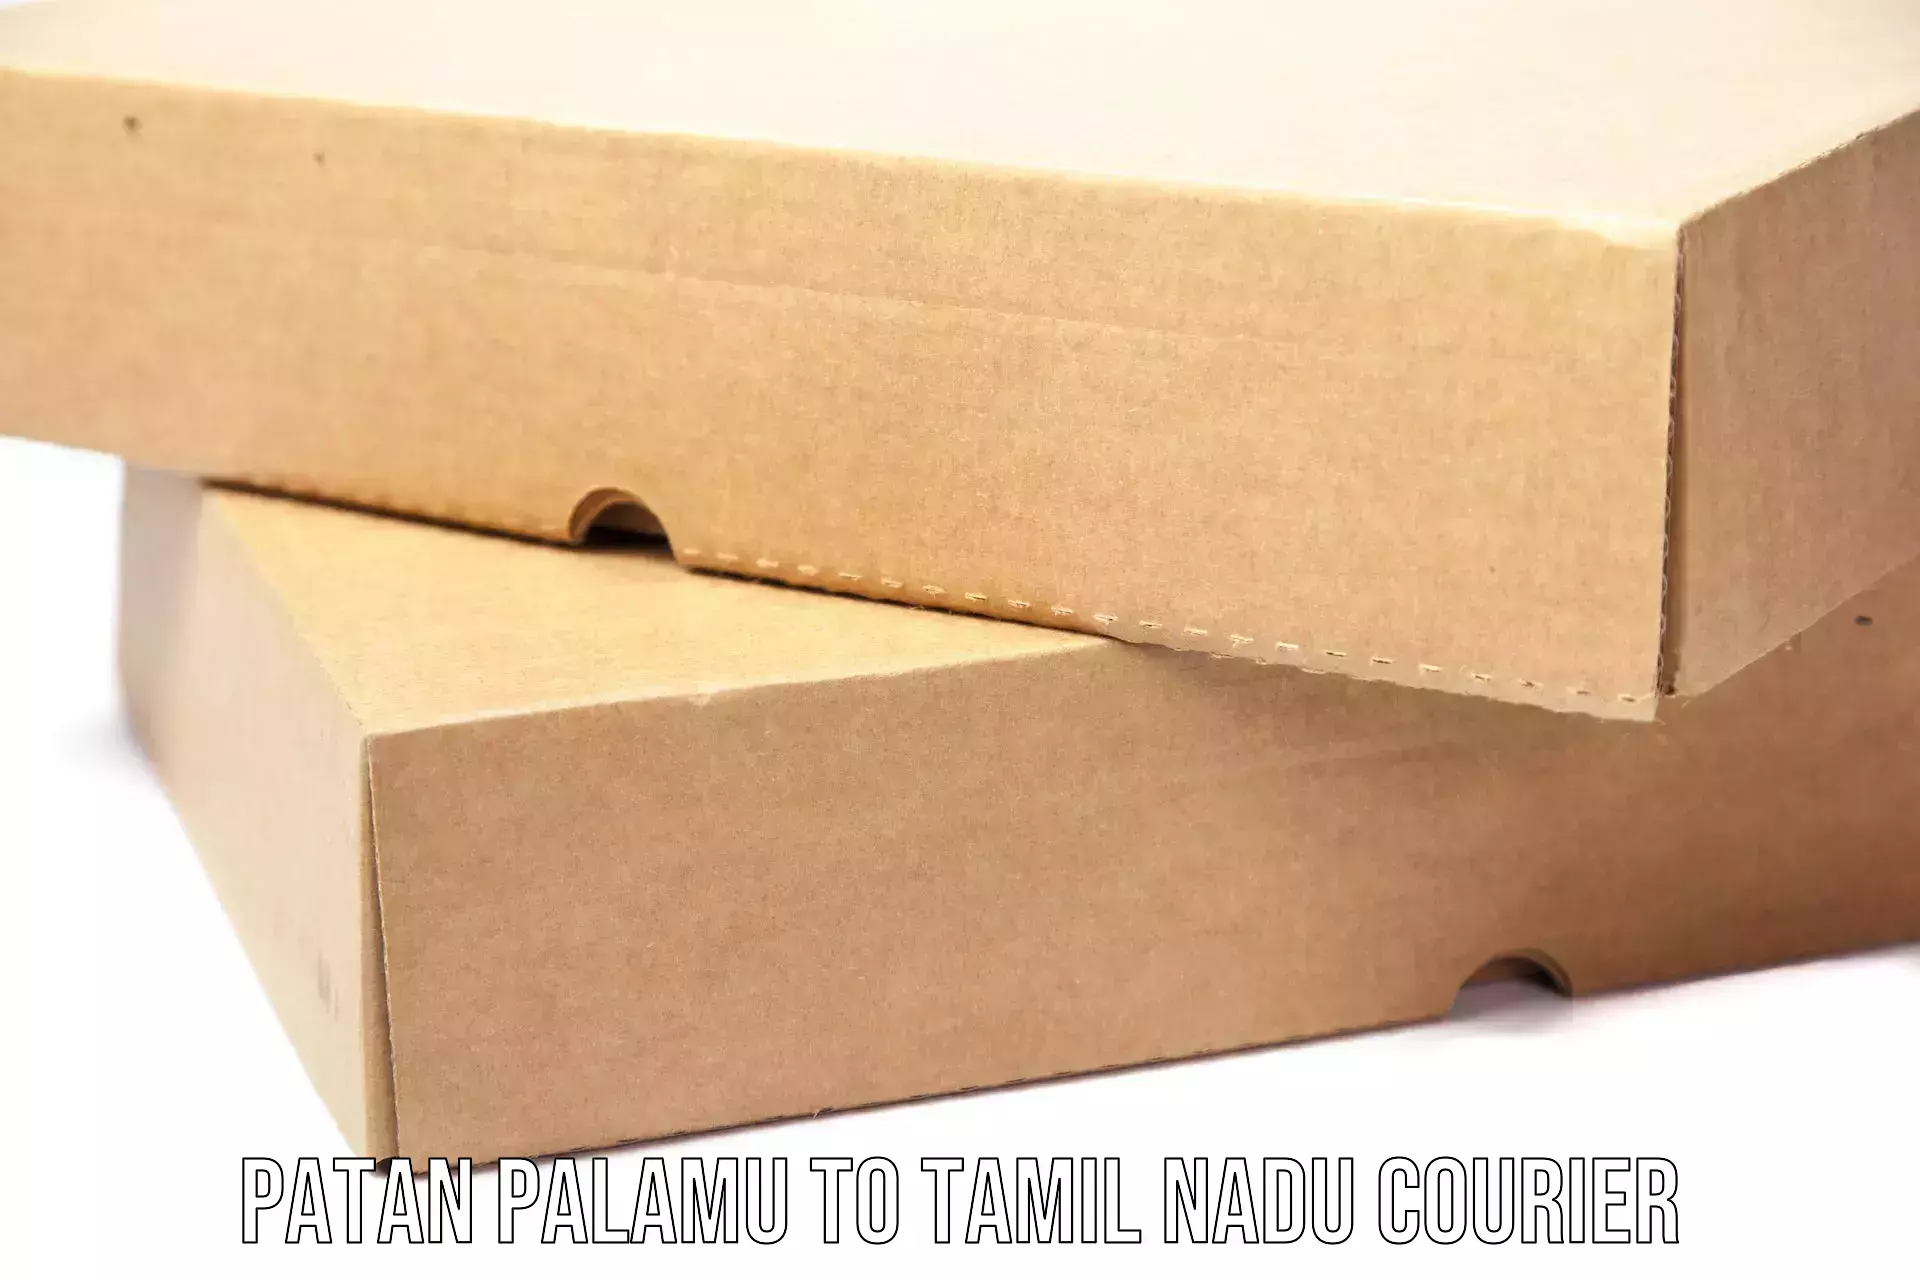 Delivery service partnership Patan Palamu to Tamil Nadu